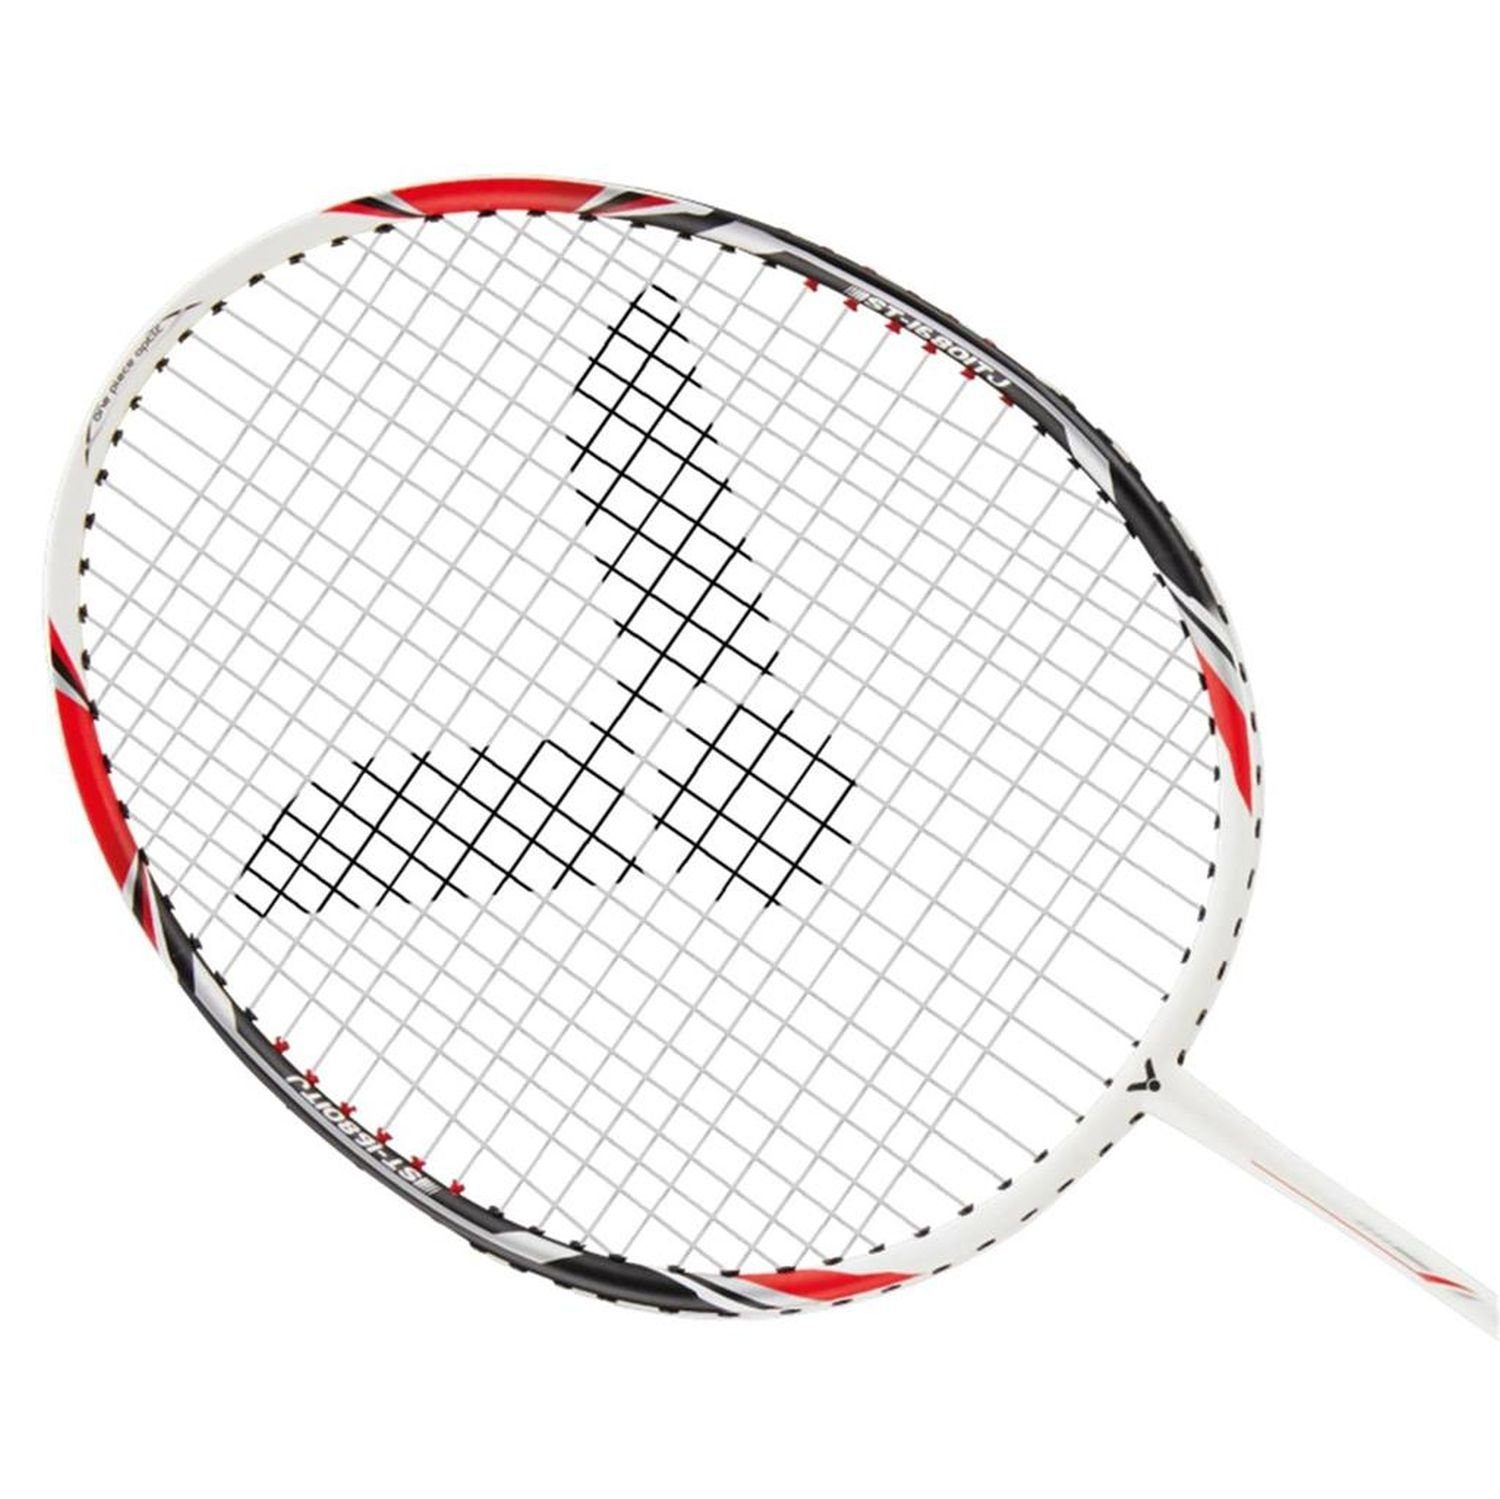 ST-1680 Badmintonschläger ITJ VICTOR